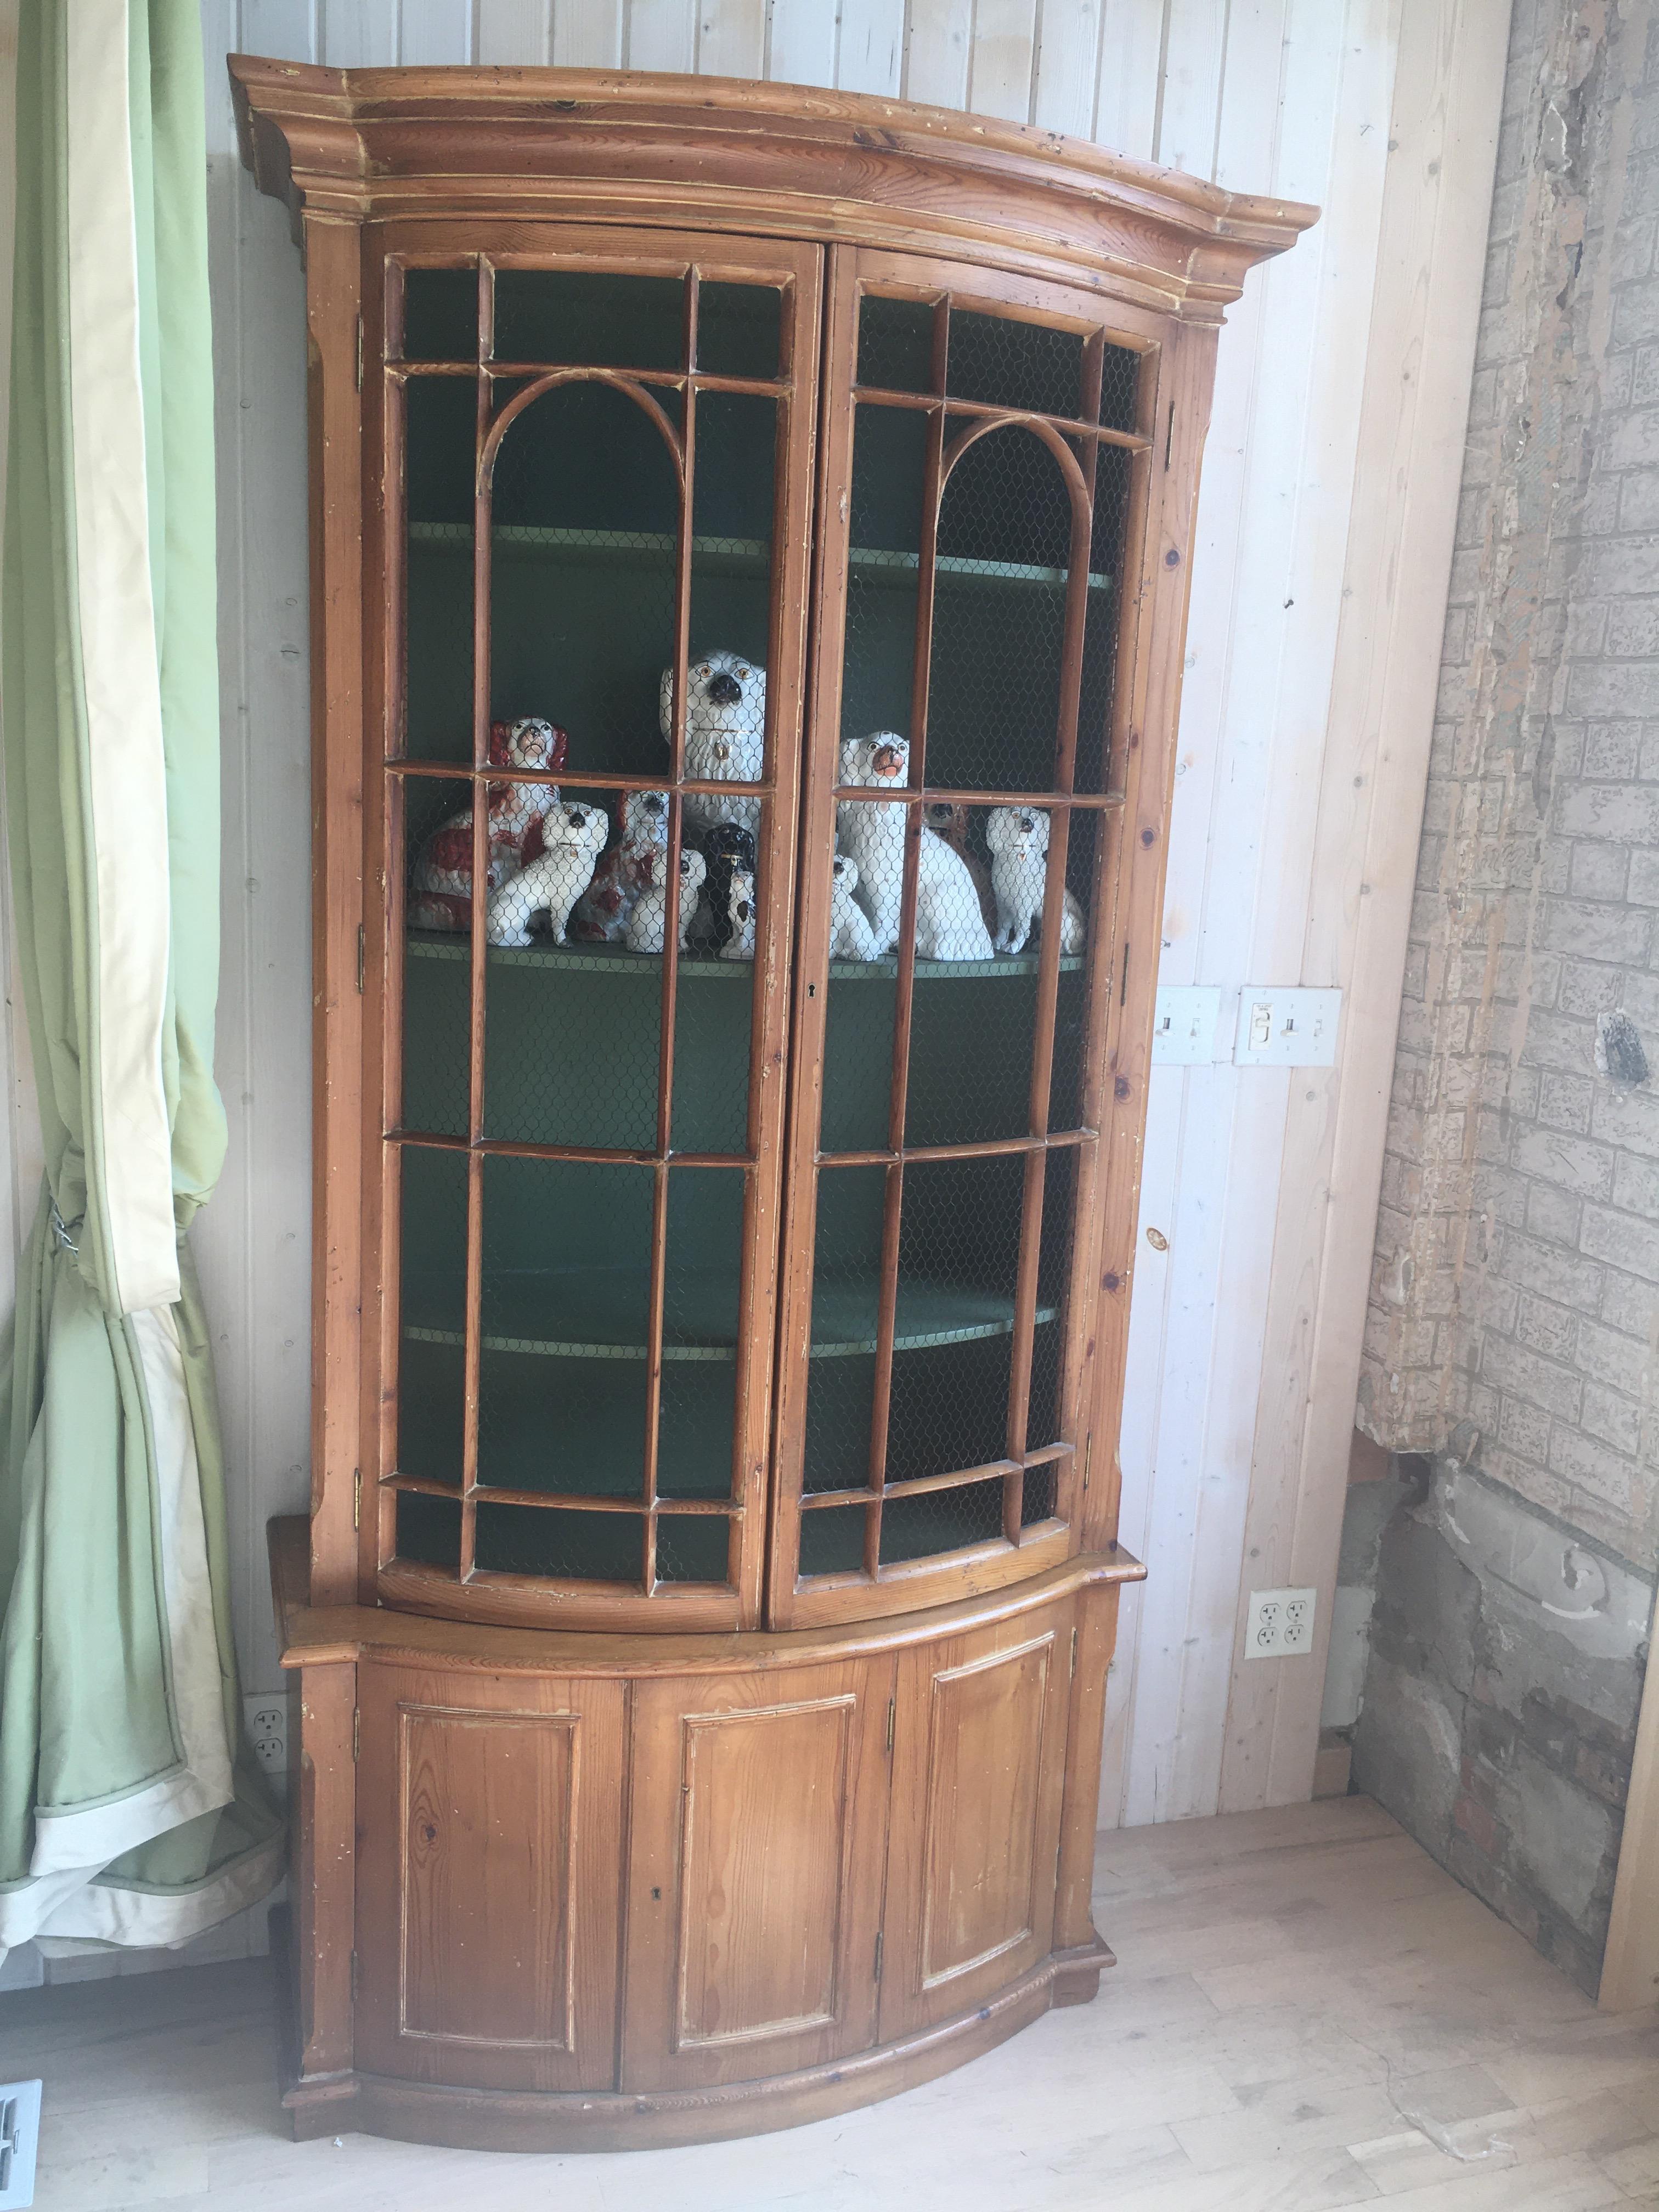 Handsome English Pine Two-Door Cabinet with Wire Mesh on Upper Doors Nice Patina 2